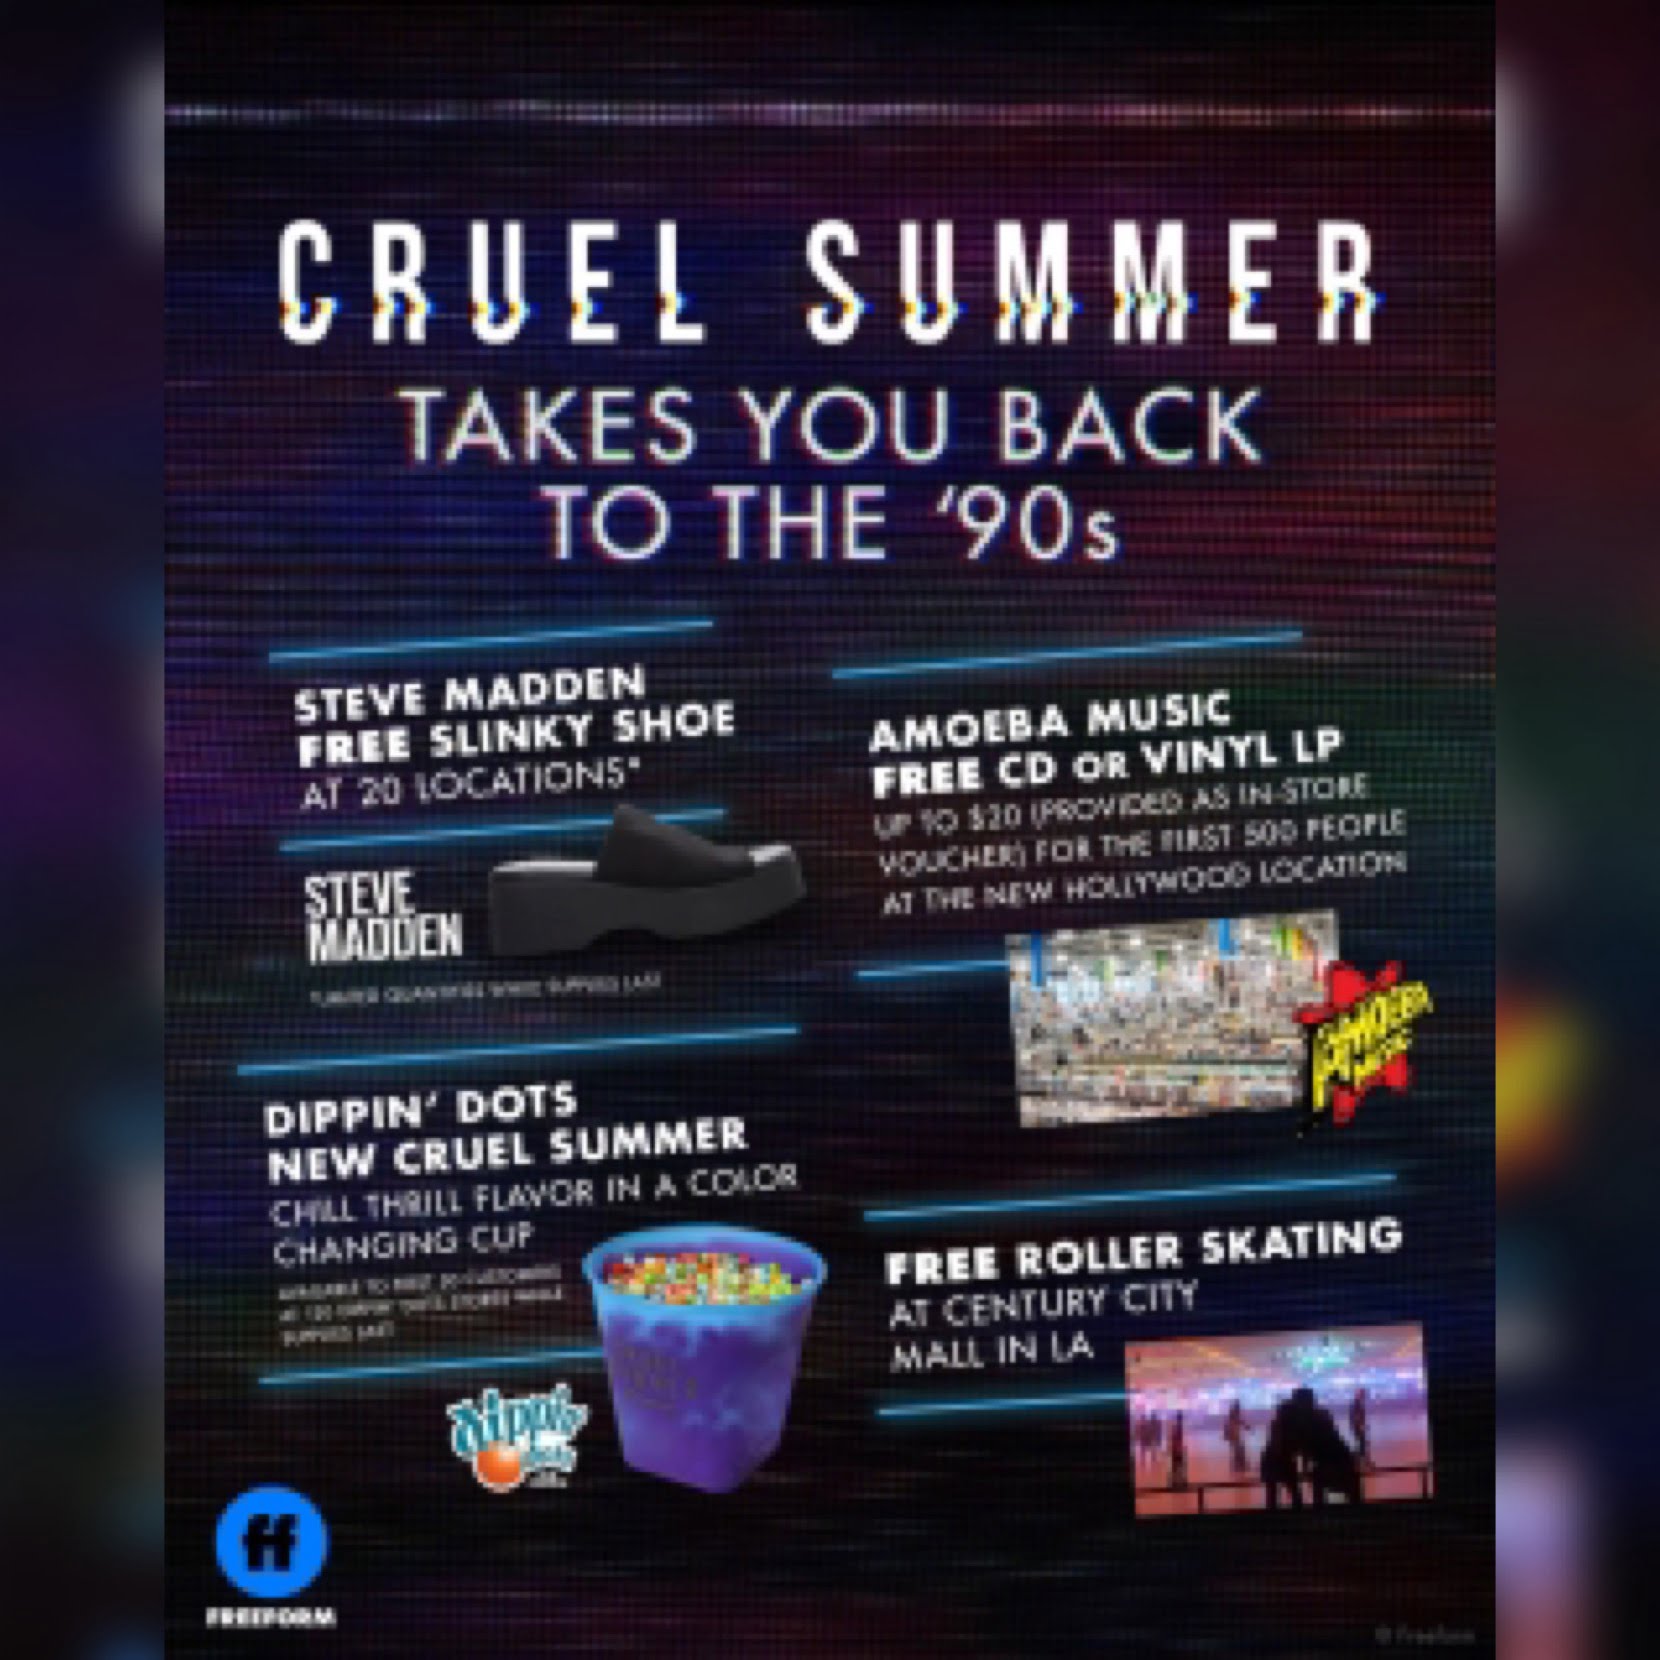 Cruel Summer image via freeform for use by 360 Magazine